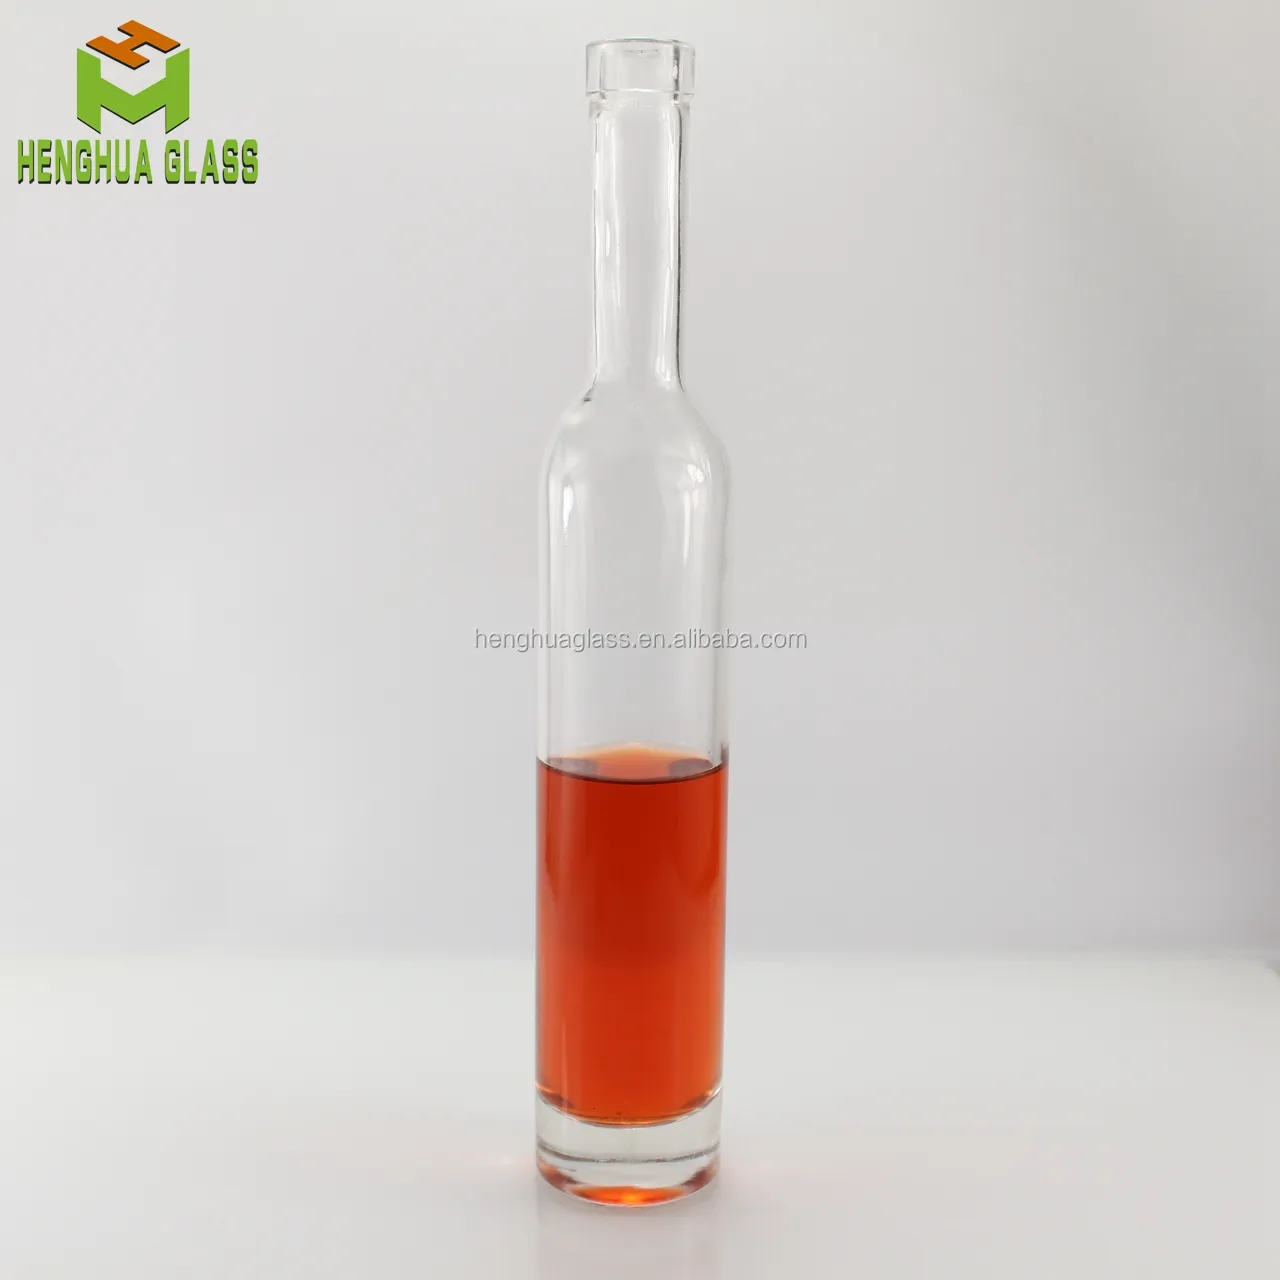 Botella de vino de cristal de pedernal transparente, envase de cristal líquido con corcho para alcohol, aceite de oliva, 375ml